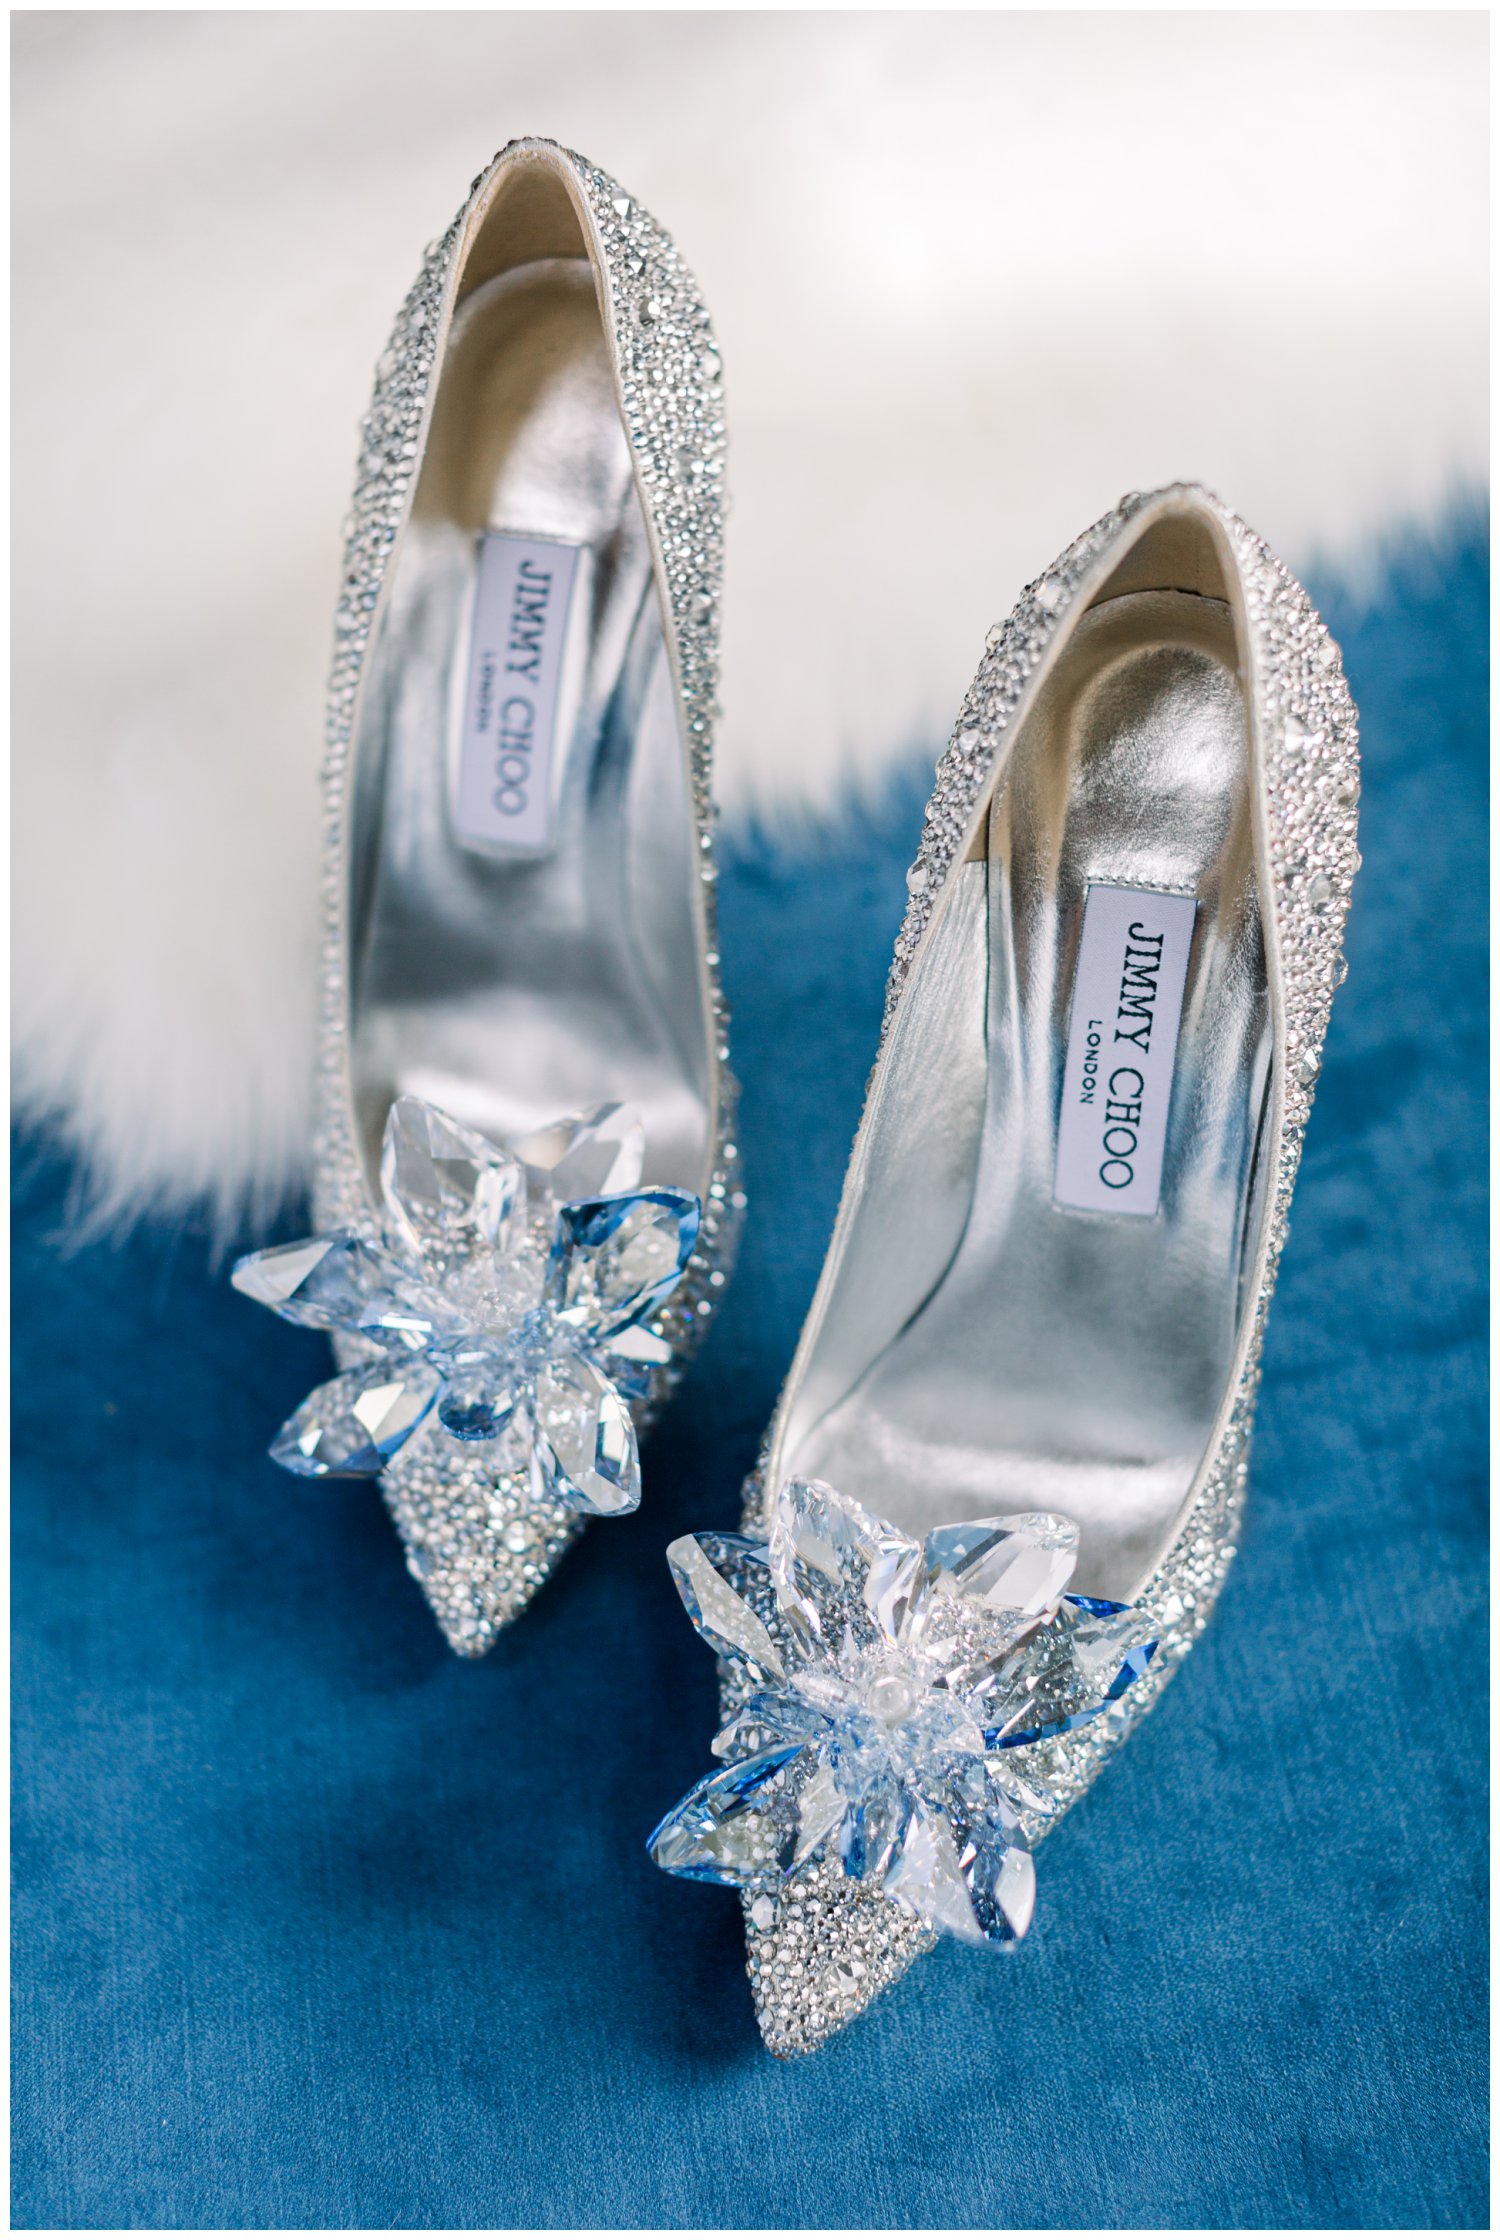 Jimmy Choo Cinderella Swarovski crystal slipper heels wedding day shoes